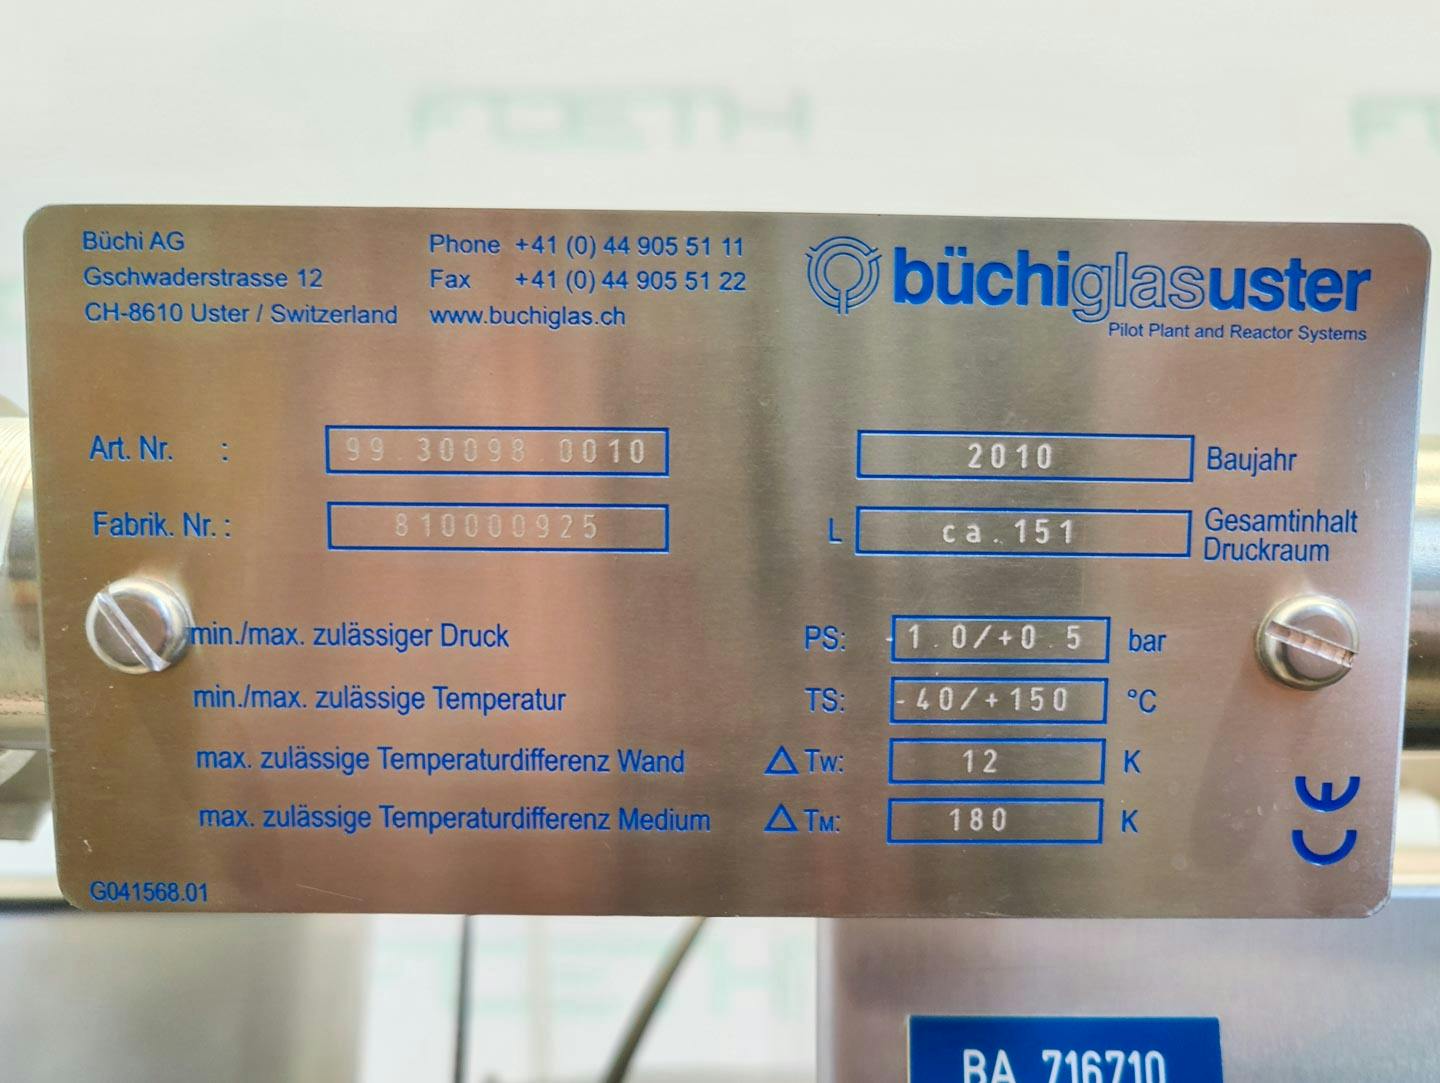 Büchi Filter 140 Ltr. (Ex) - filter reactor - Nutsche filtr - image 13